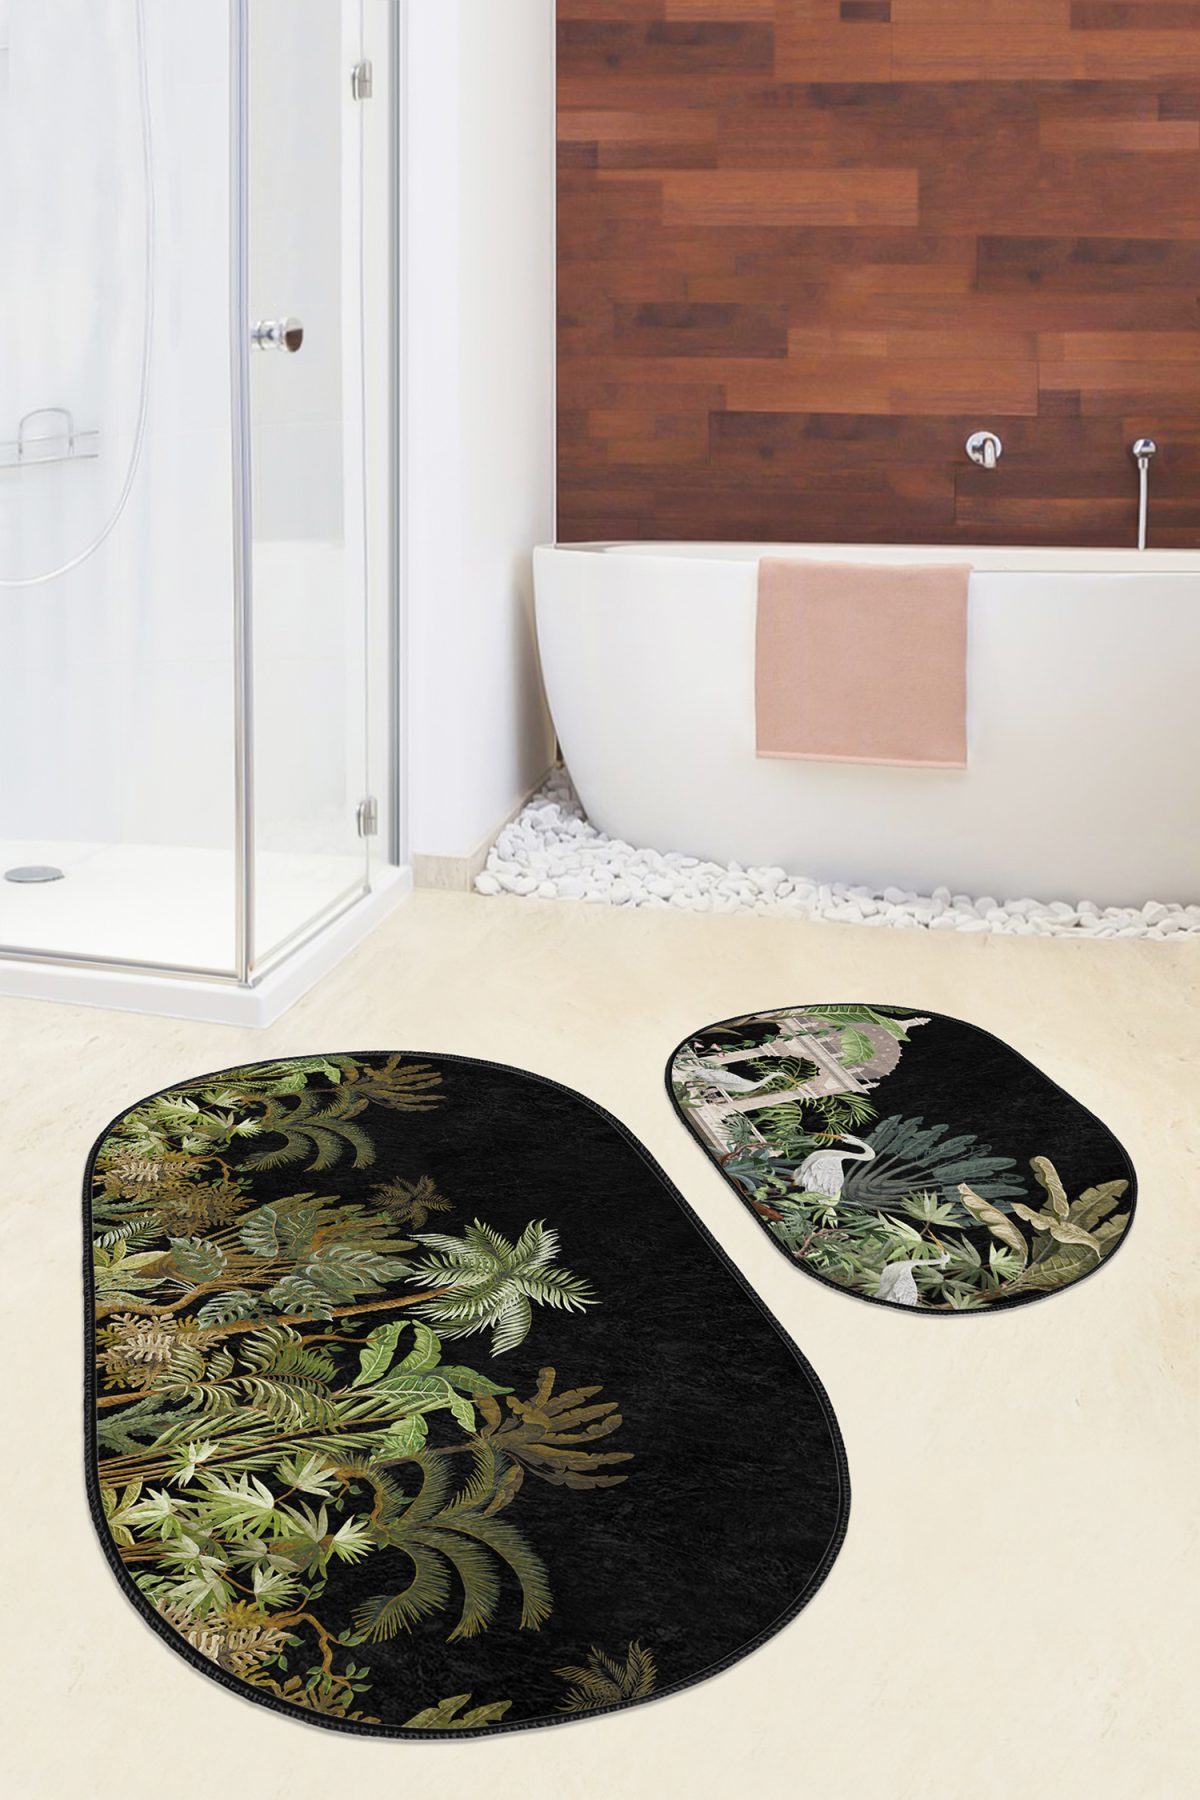 Siyah Zemin Tropik Ağaçlar Özel Tasarım 2'li Oval Mutfak Paspas Seti & Banyo Hakı Seti Realhomes